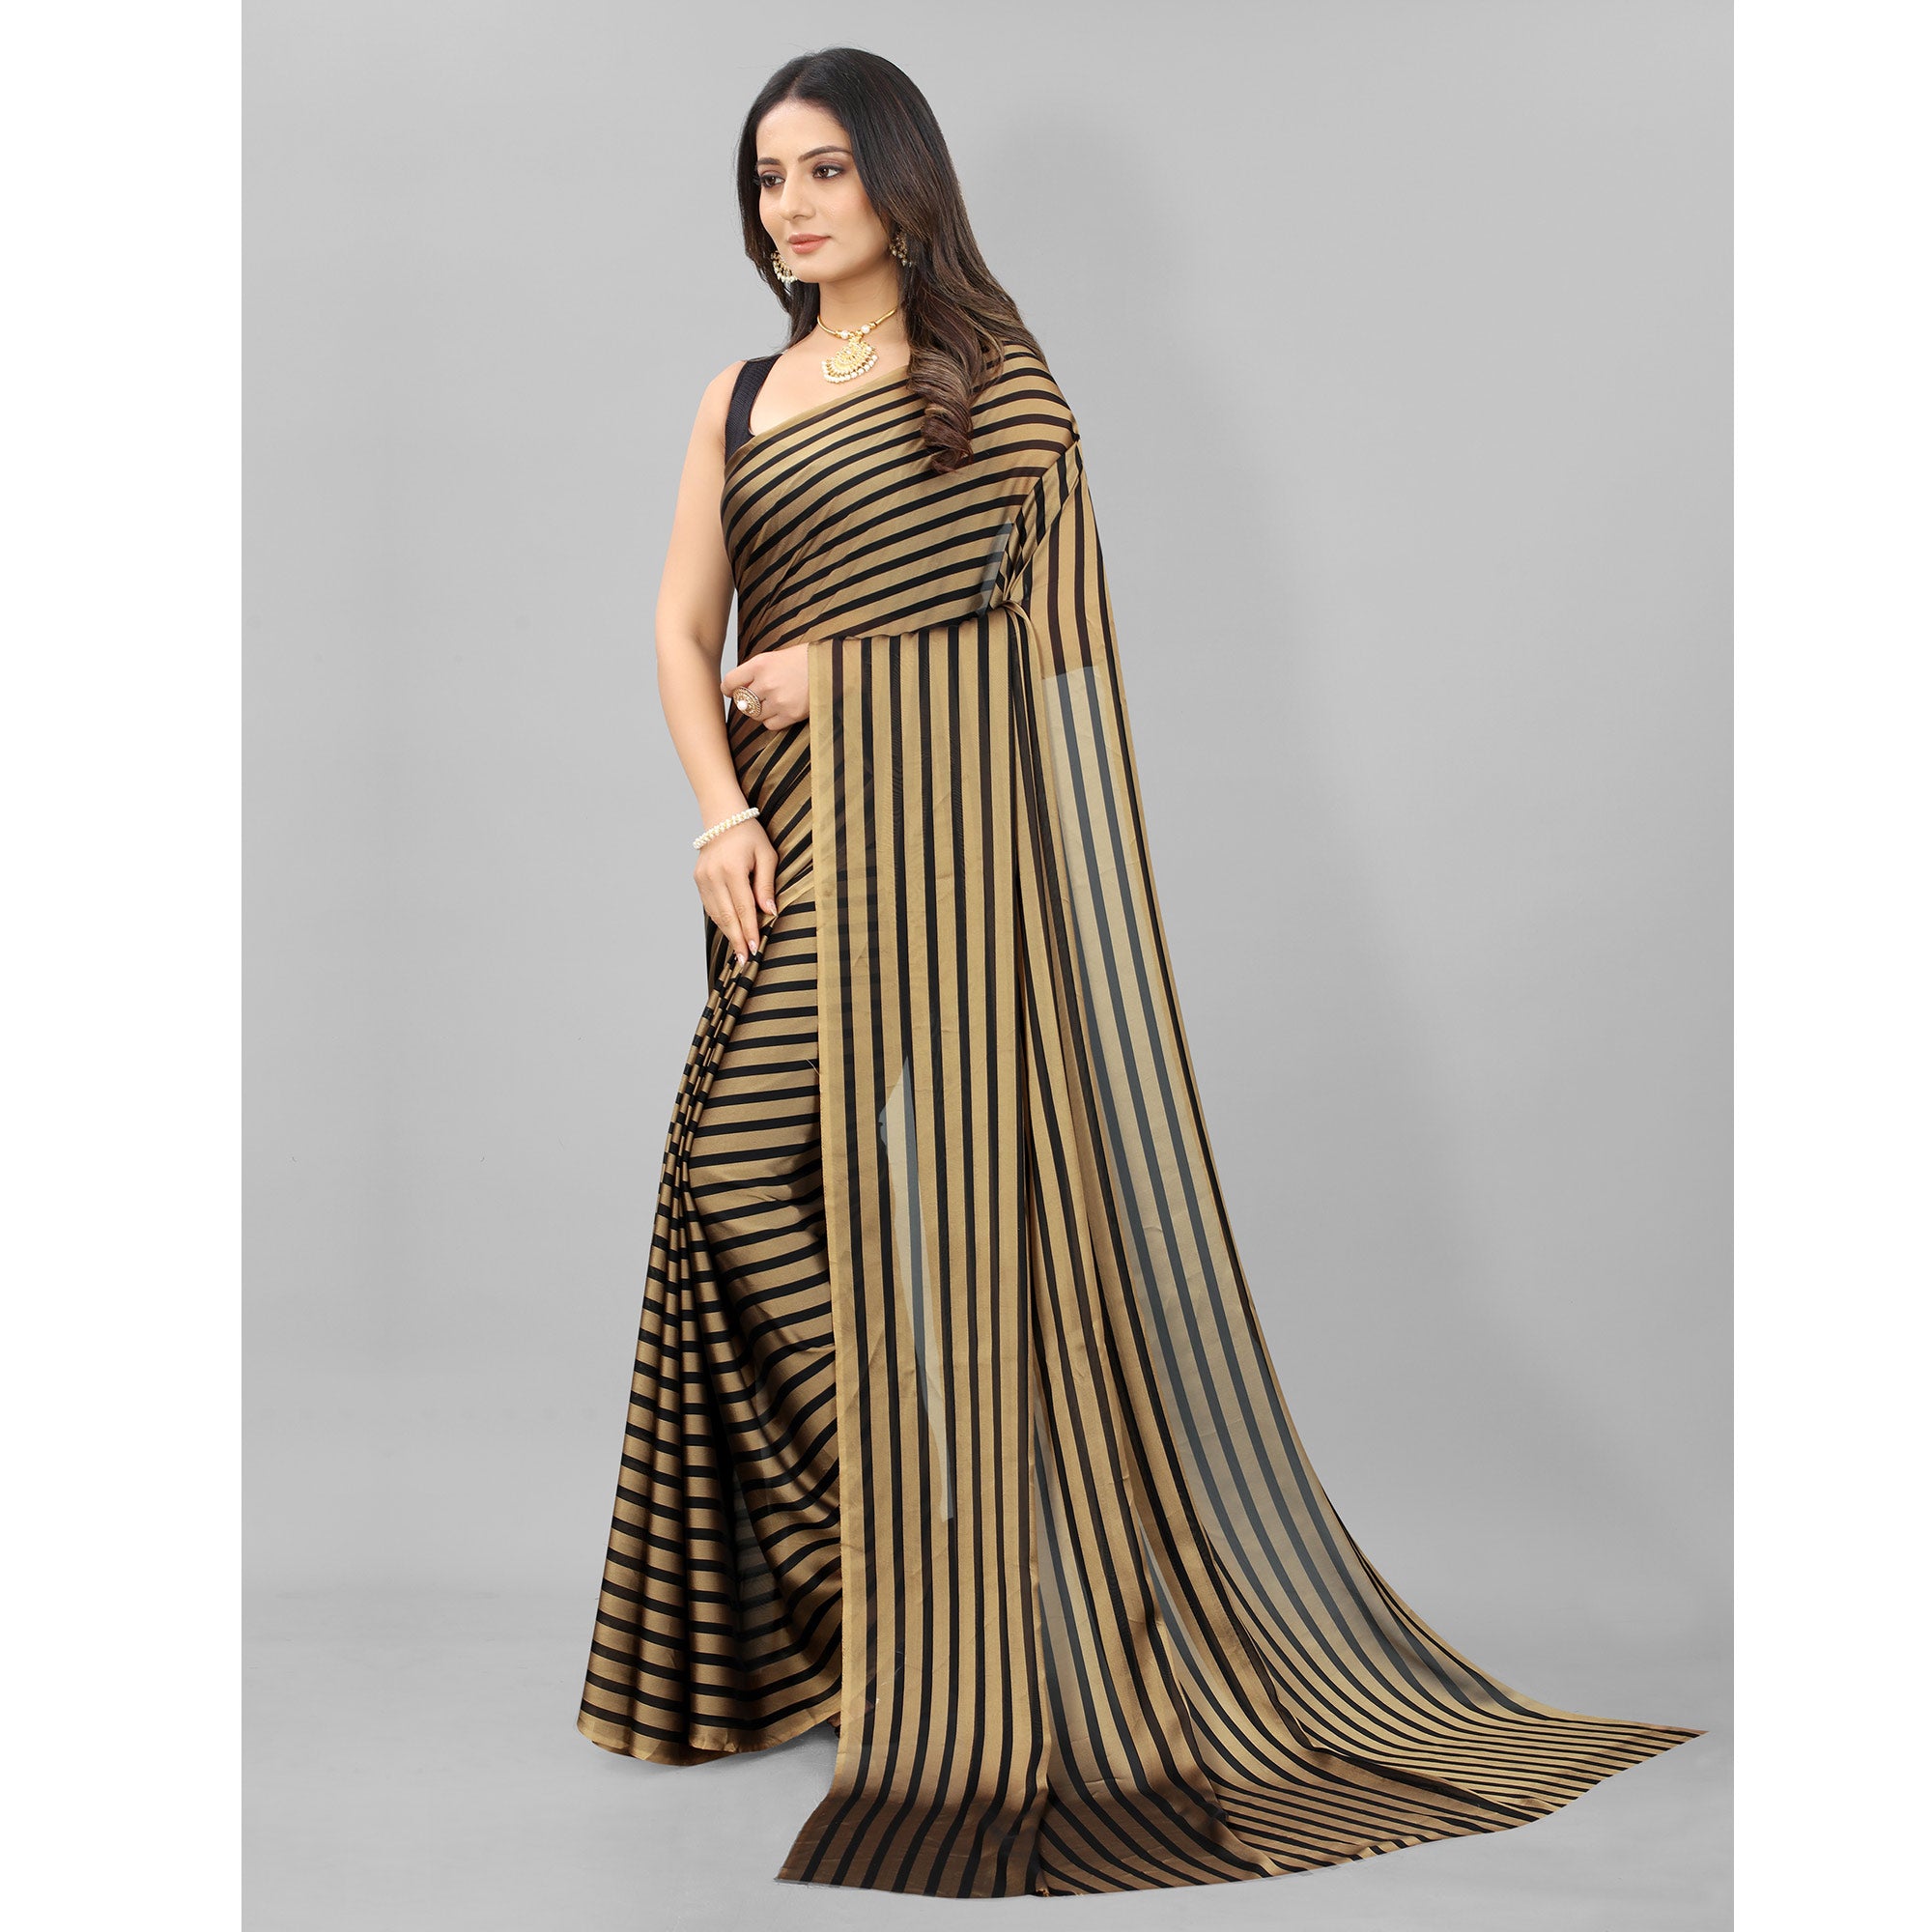 Gold Striped Printed Art Silk Saree